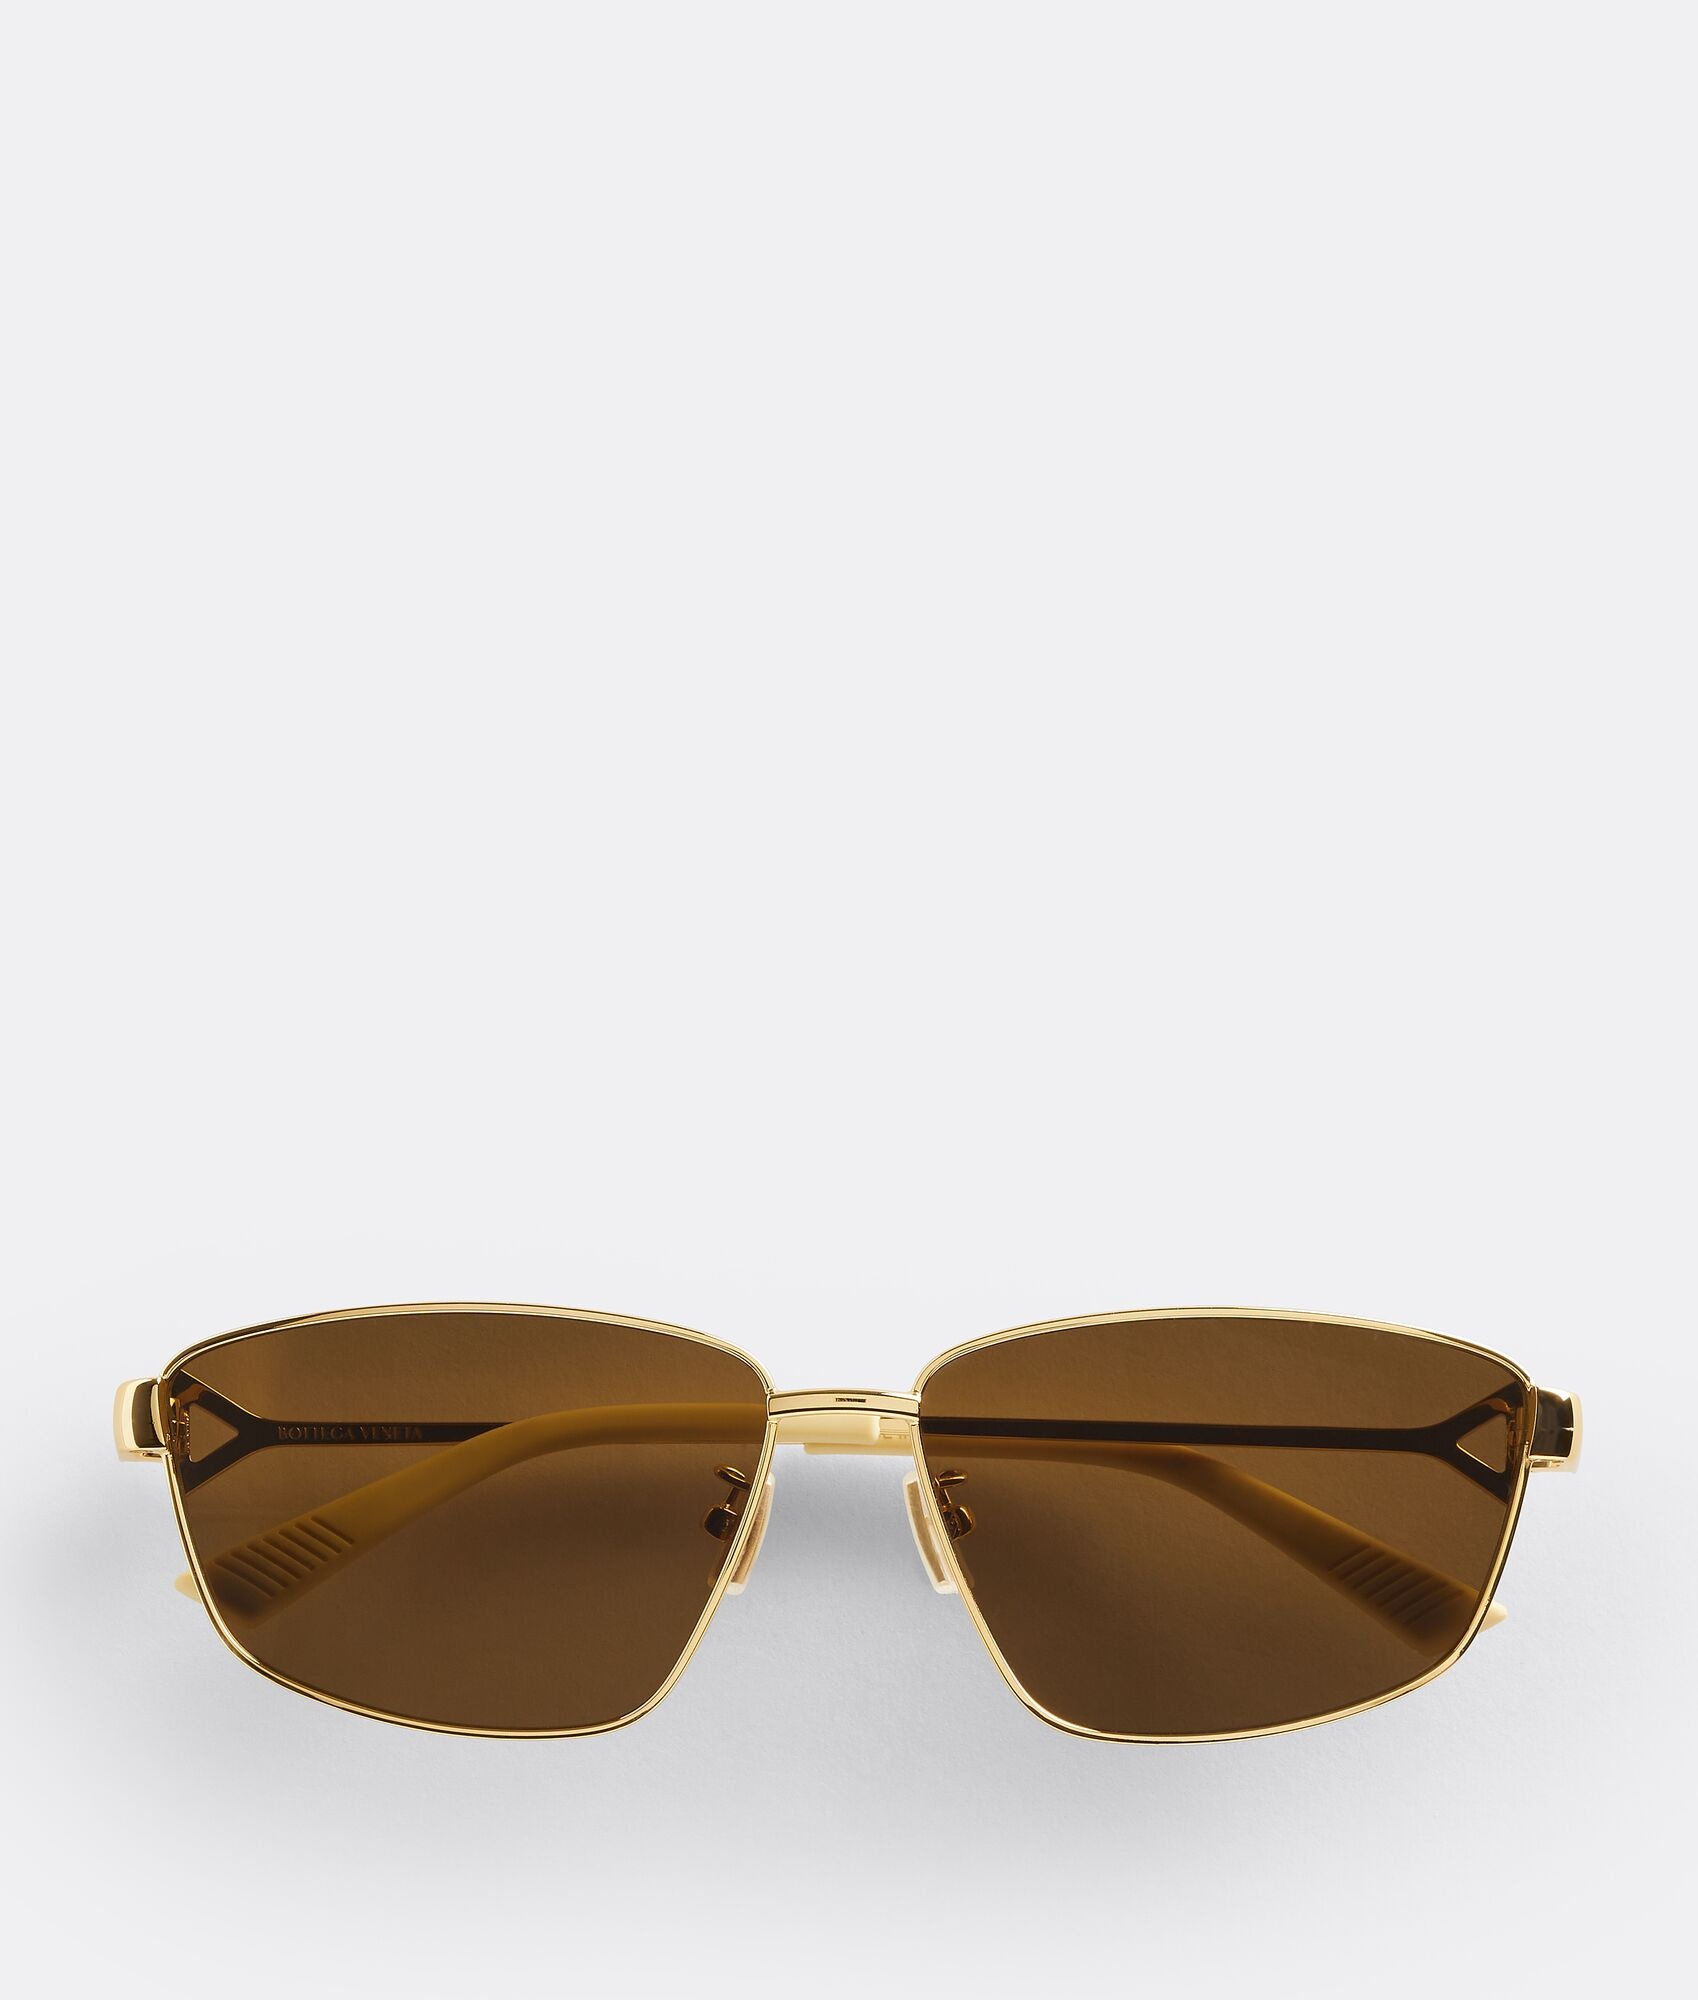 turn square sunglasses - 1